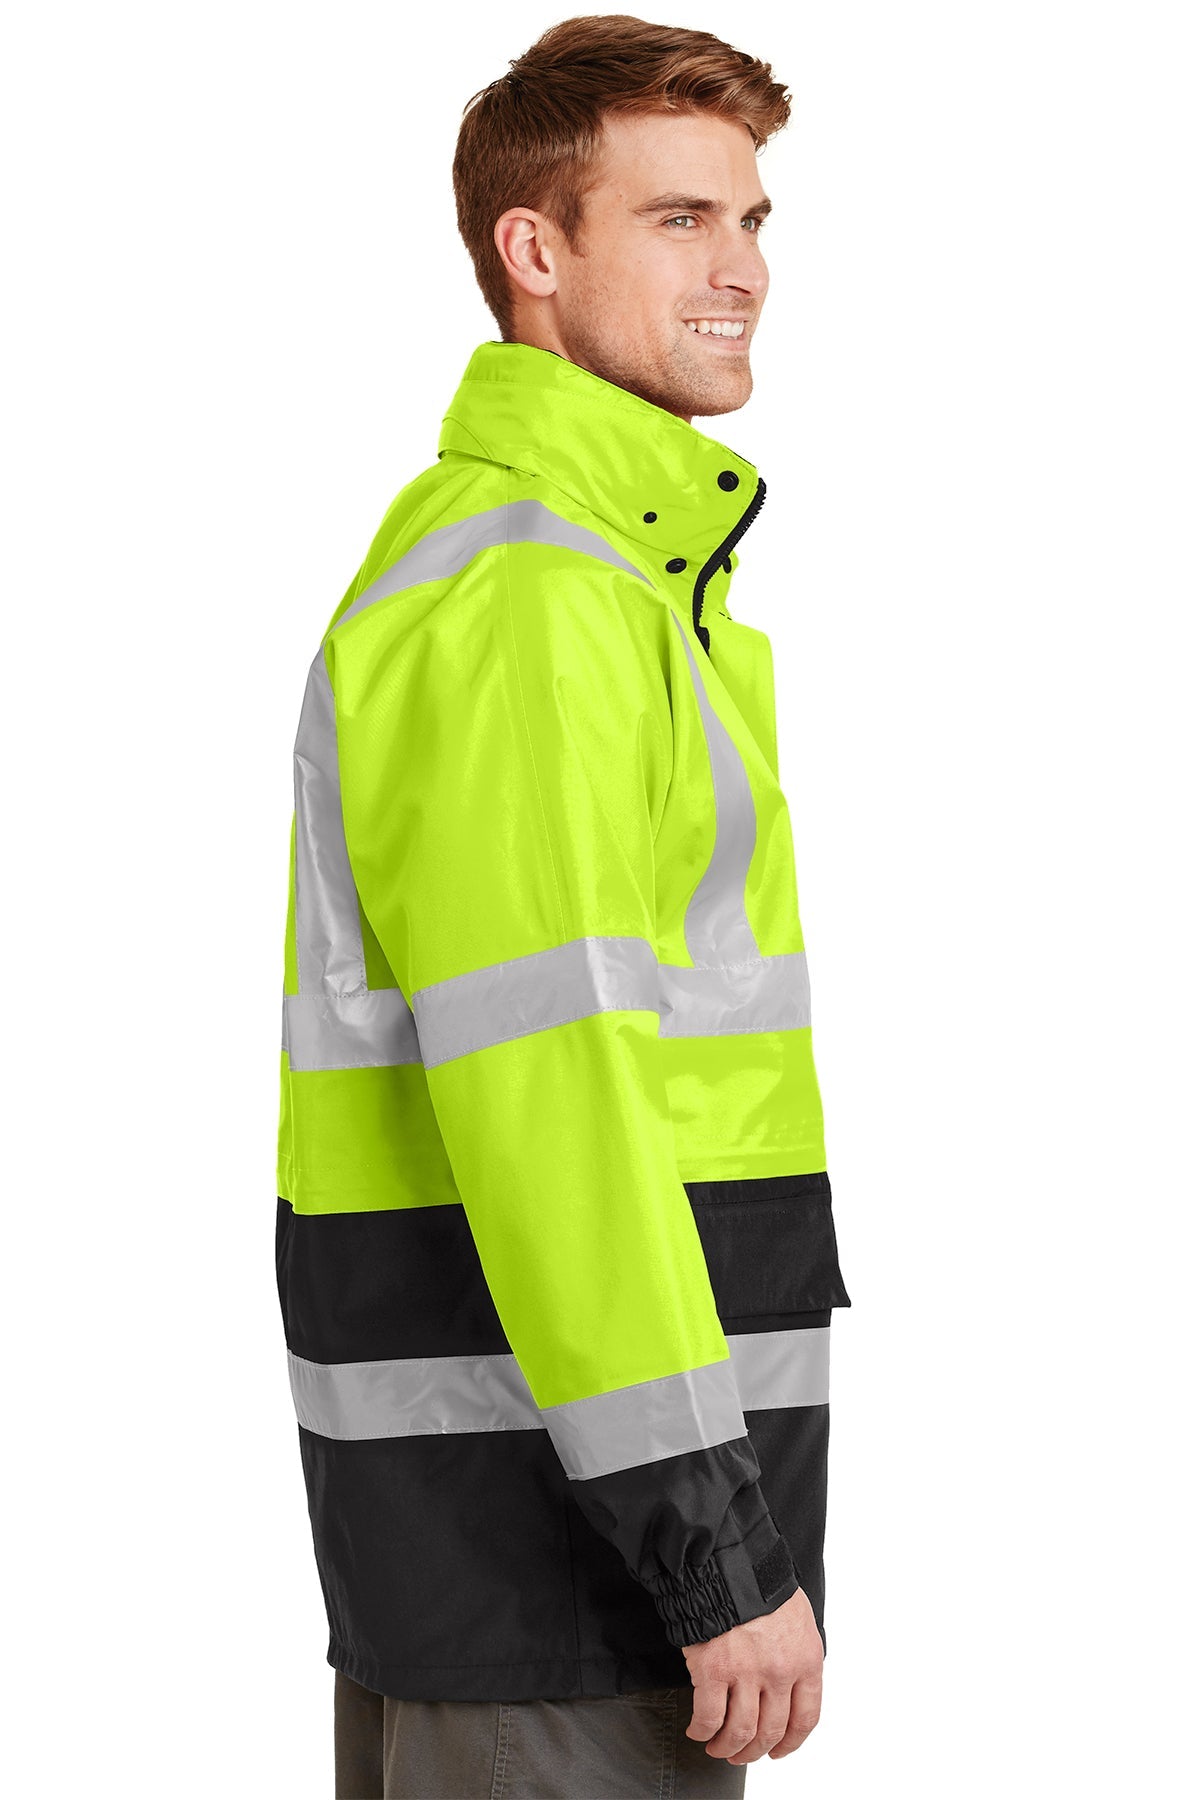 cornerstone_csj24 _safety yellow/ black_company_logo_jackets